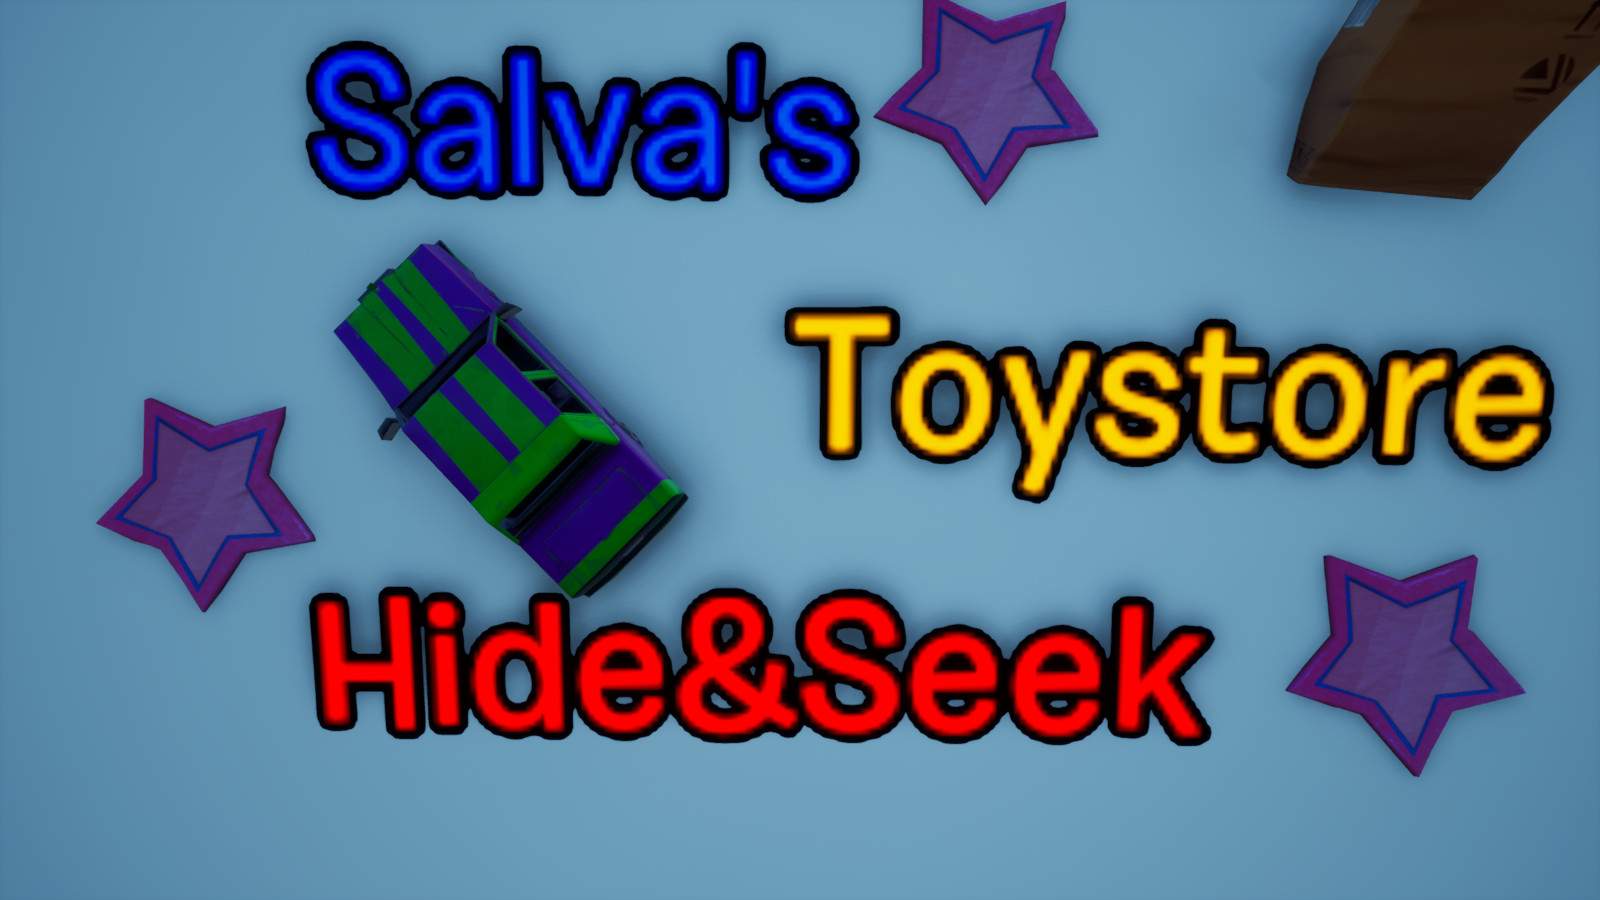 SALVA'S TOYSTORE HIDE&SEEK